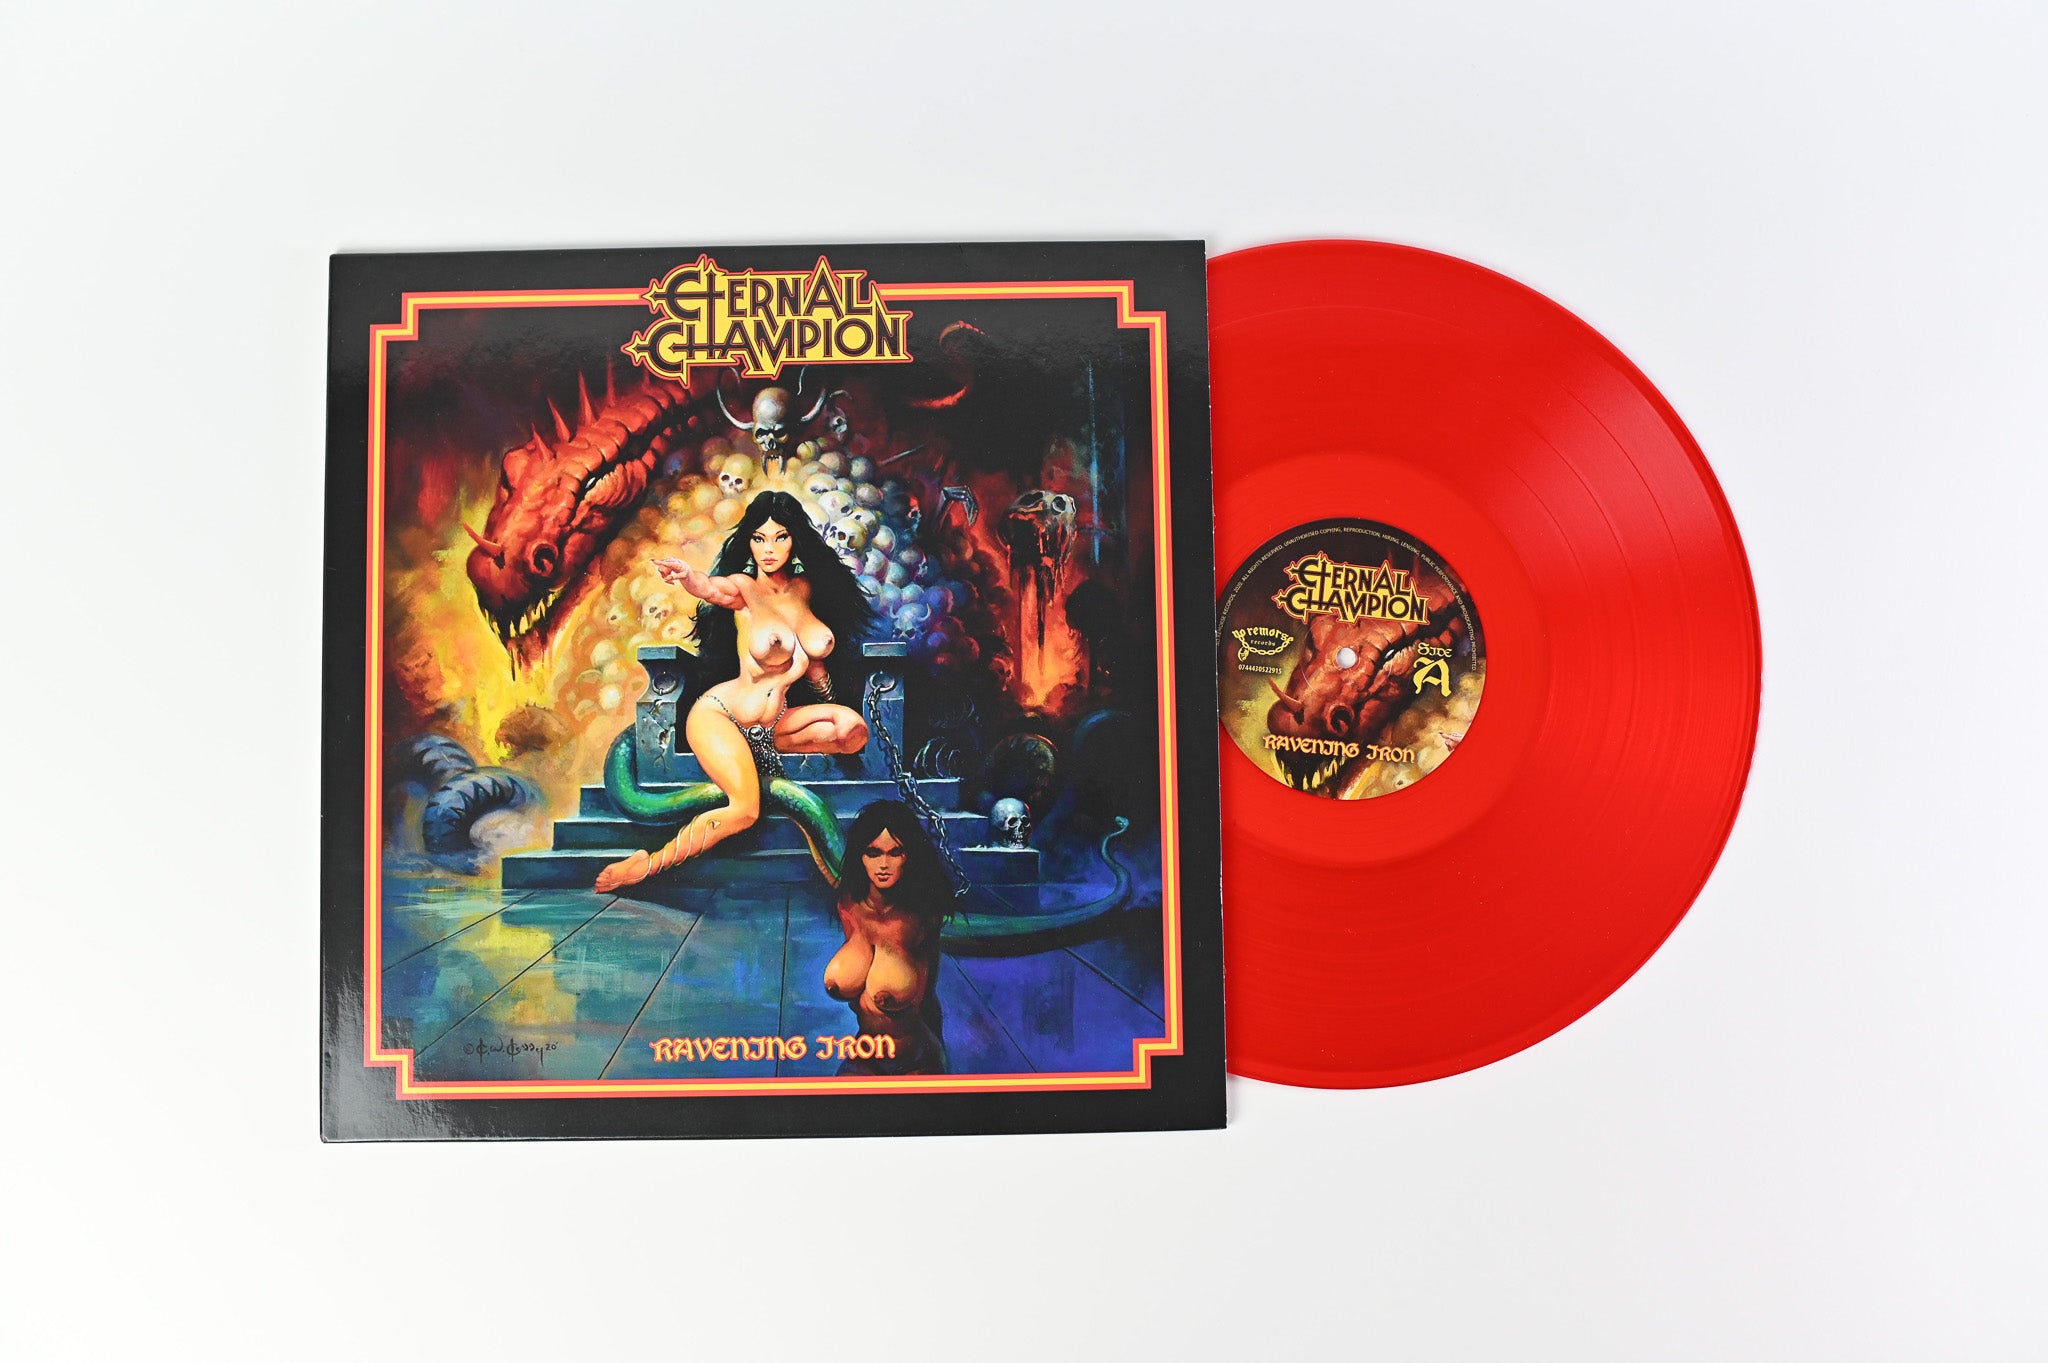 Eternal Champion - Ravening Iron on No Remorse Ltd Red Transparent Vinyl